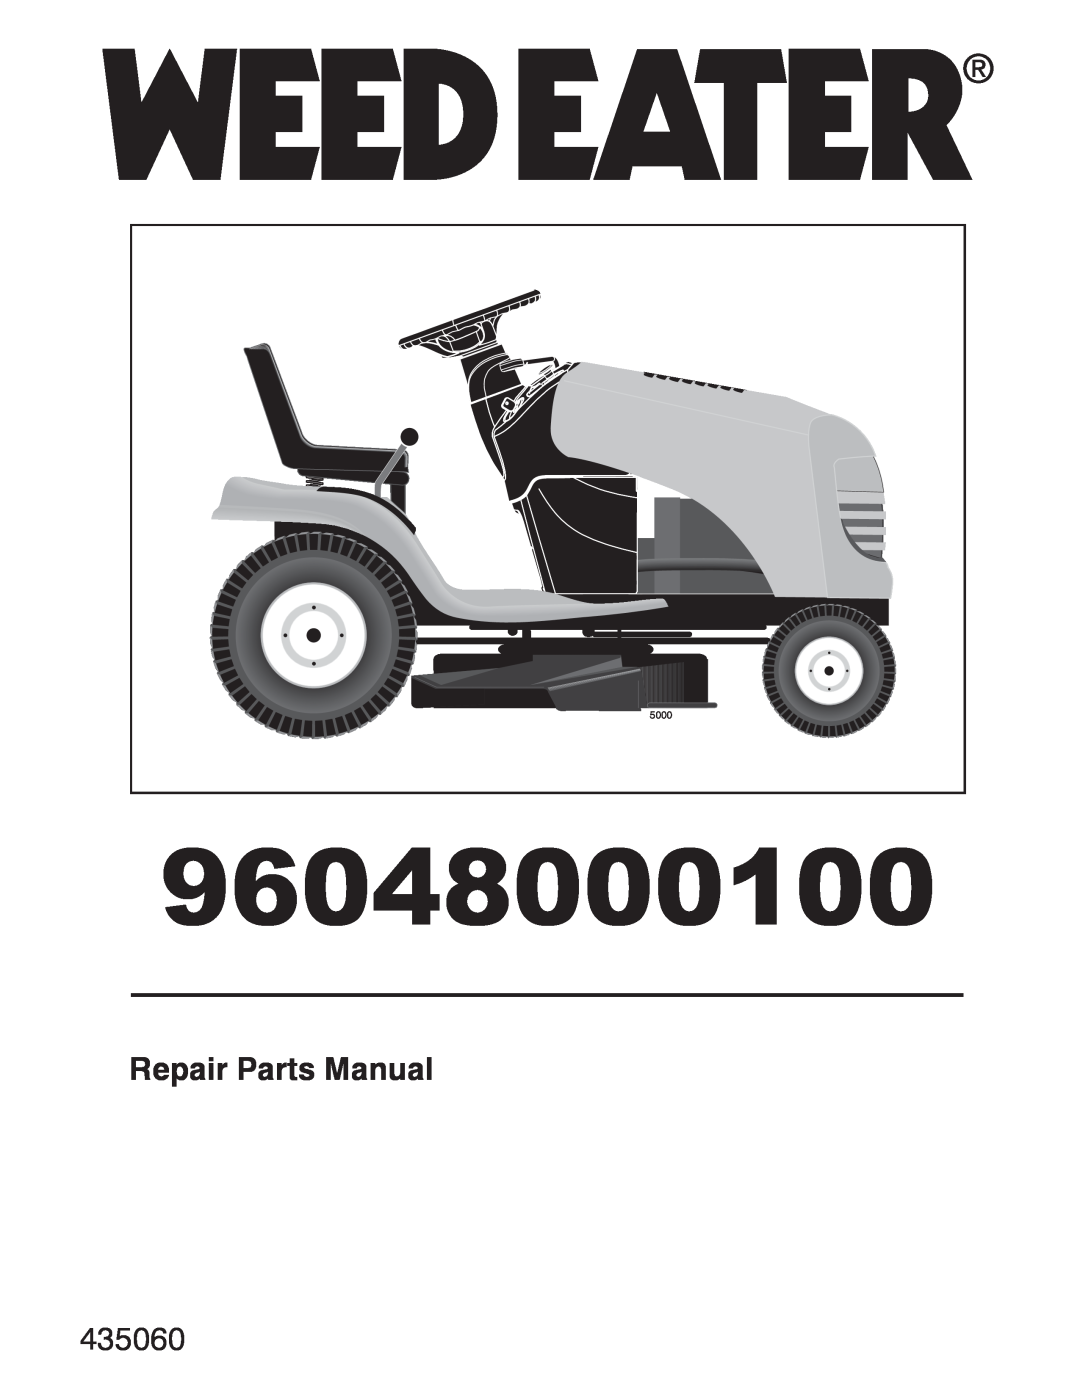 Weed Eater 96048000100 manual Operators Manual, 435057, 02.11.10 SR, Printed in the U.S.A, 5000 